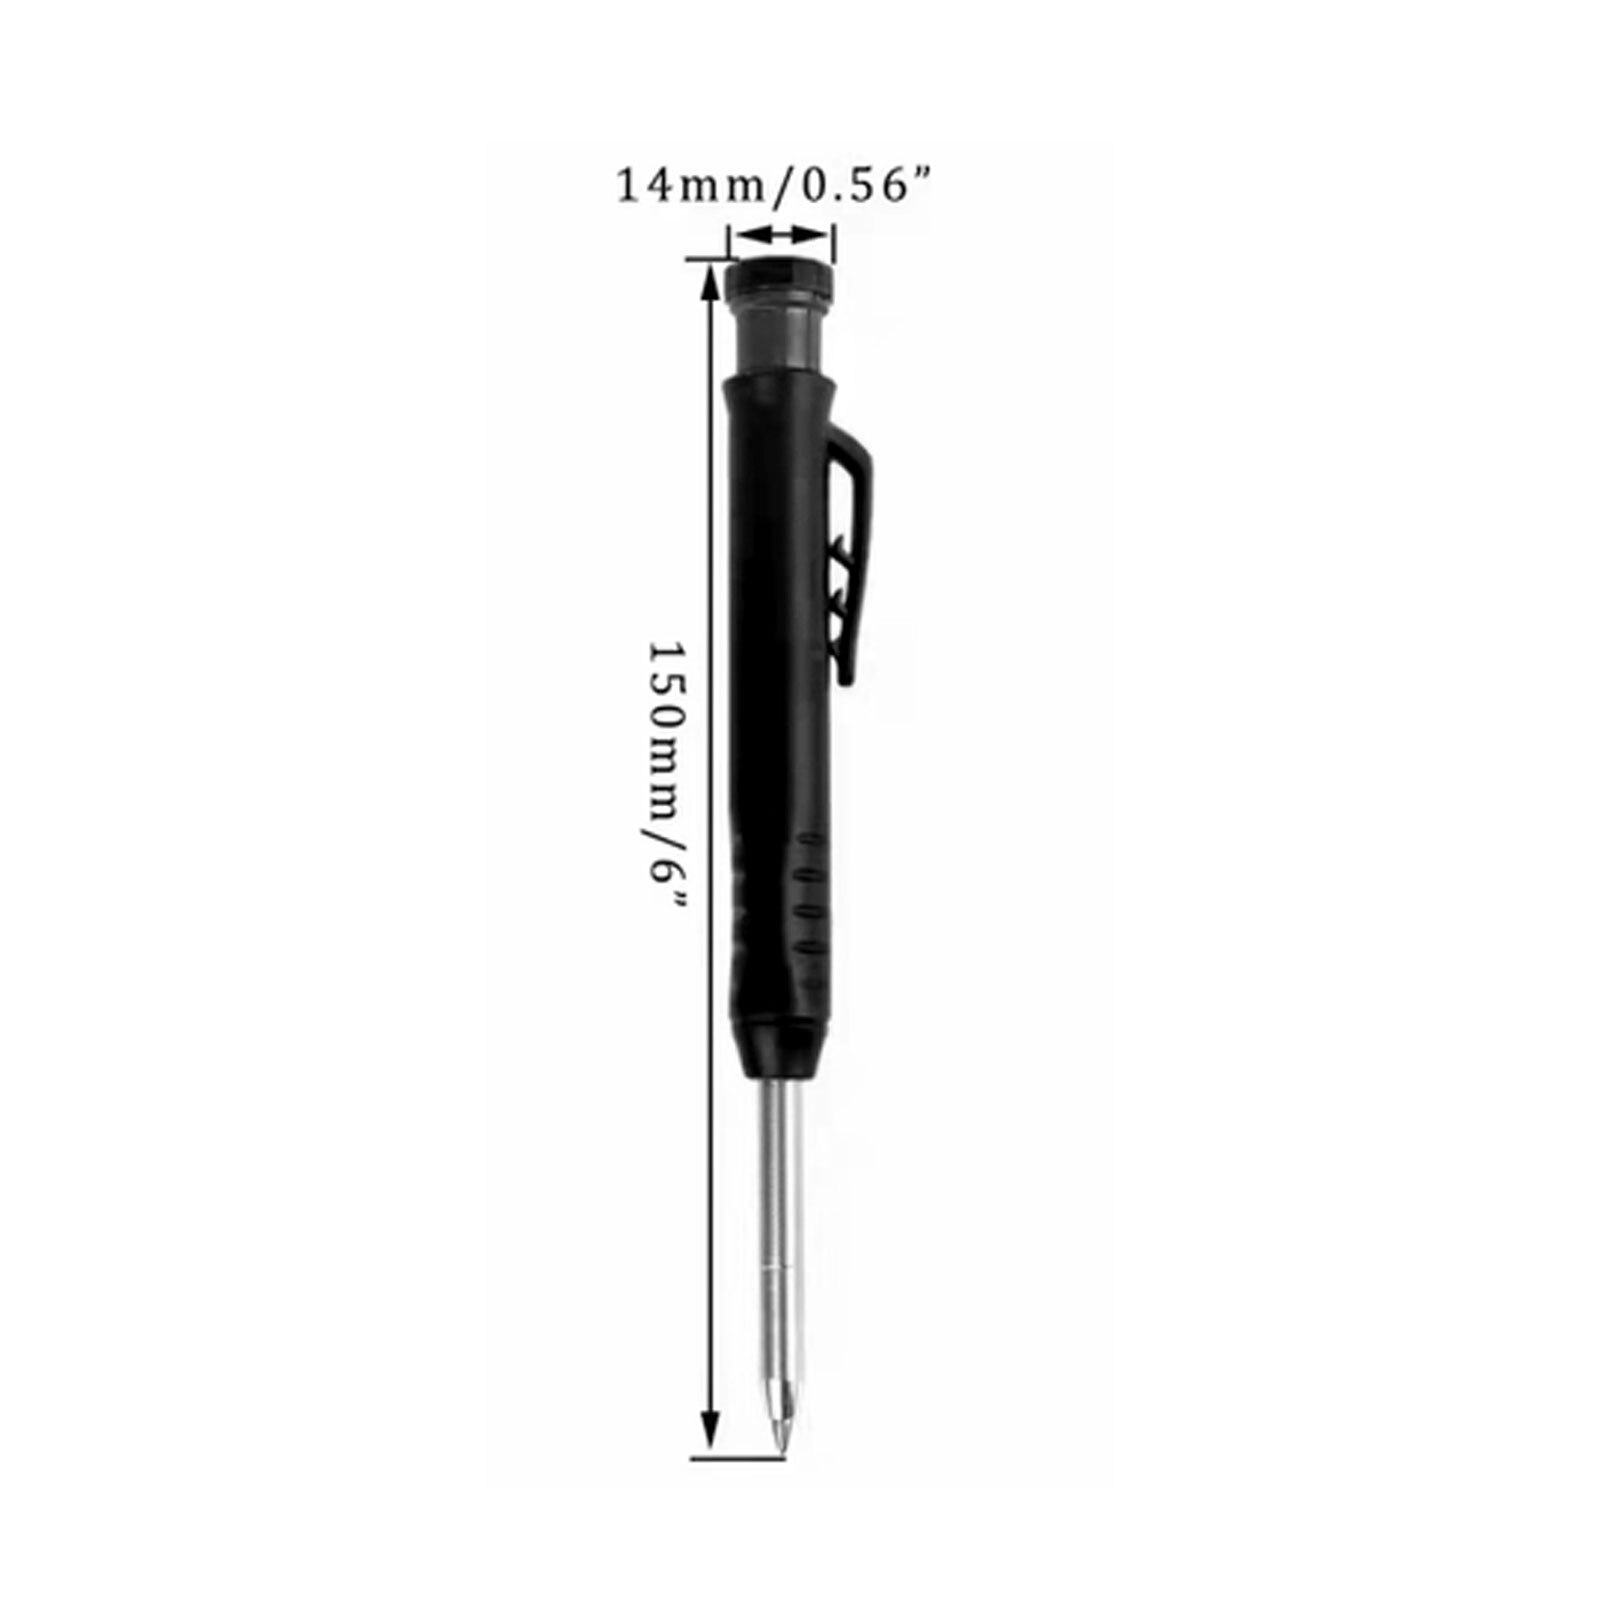 Scribing Tool: Multi-function Construction Pencil, Woodworking Measuring Tool - SKINMOZ MARKET